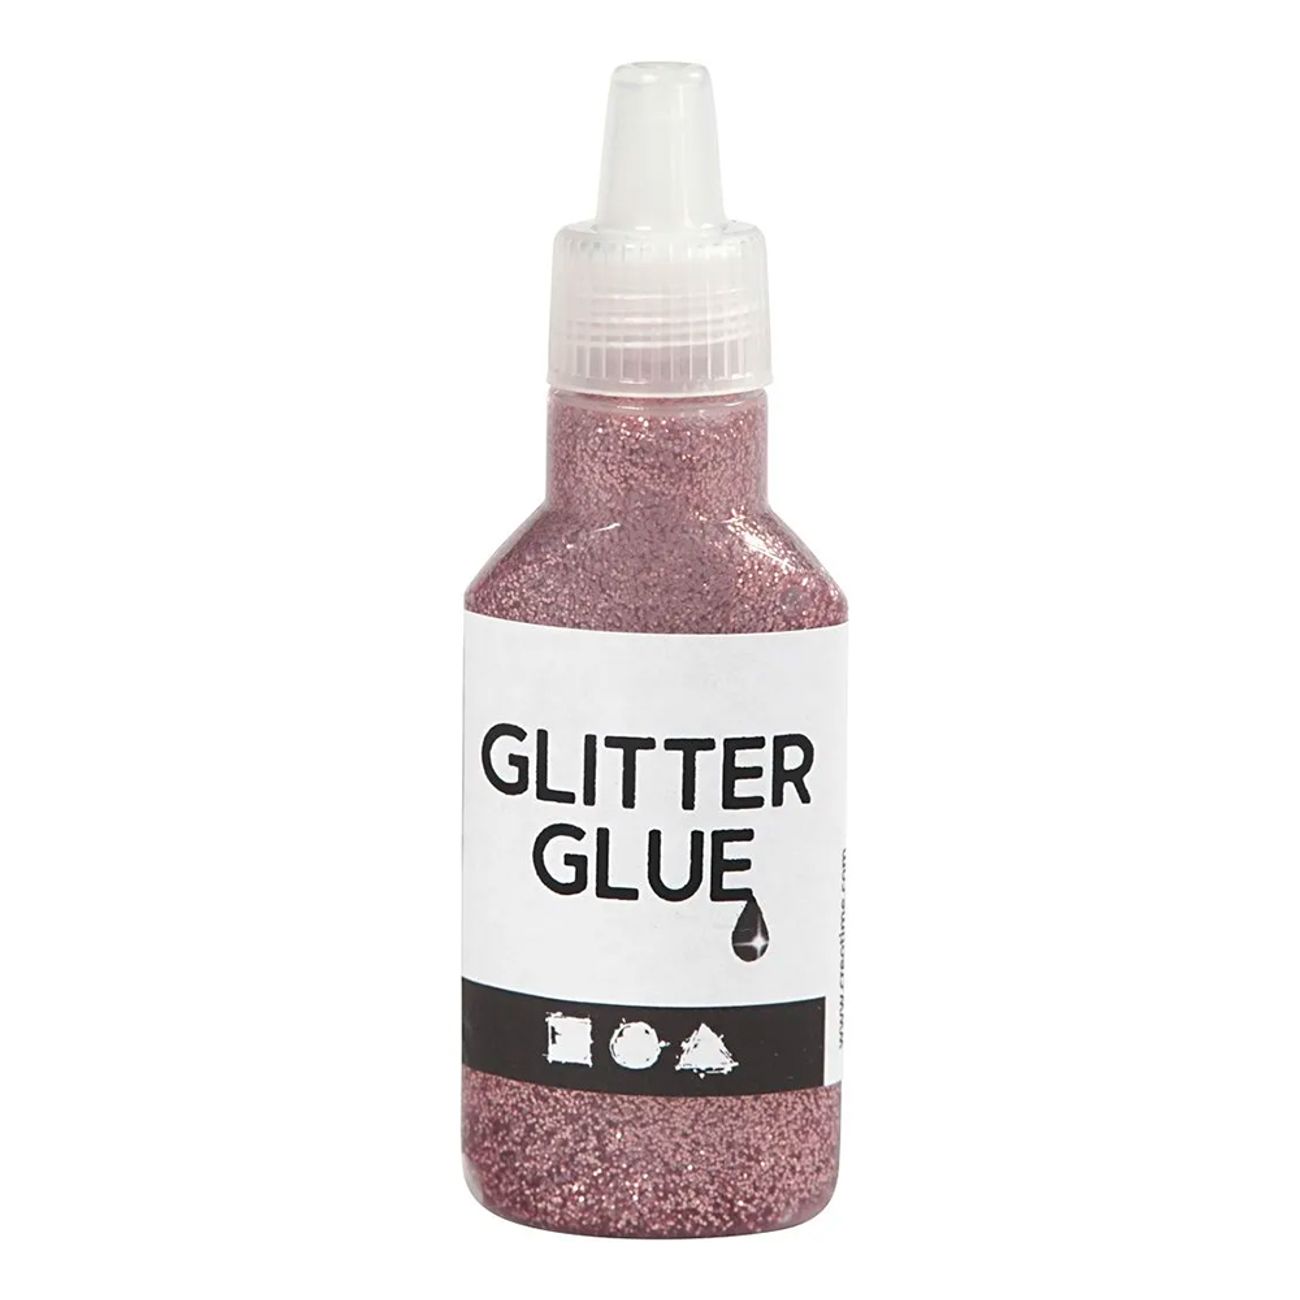 glitterlim-i-flaska-81874-9